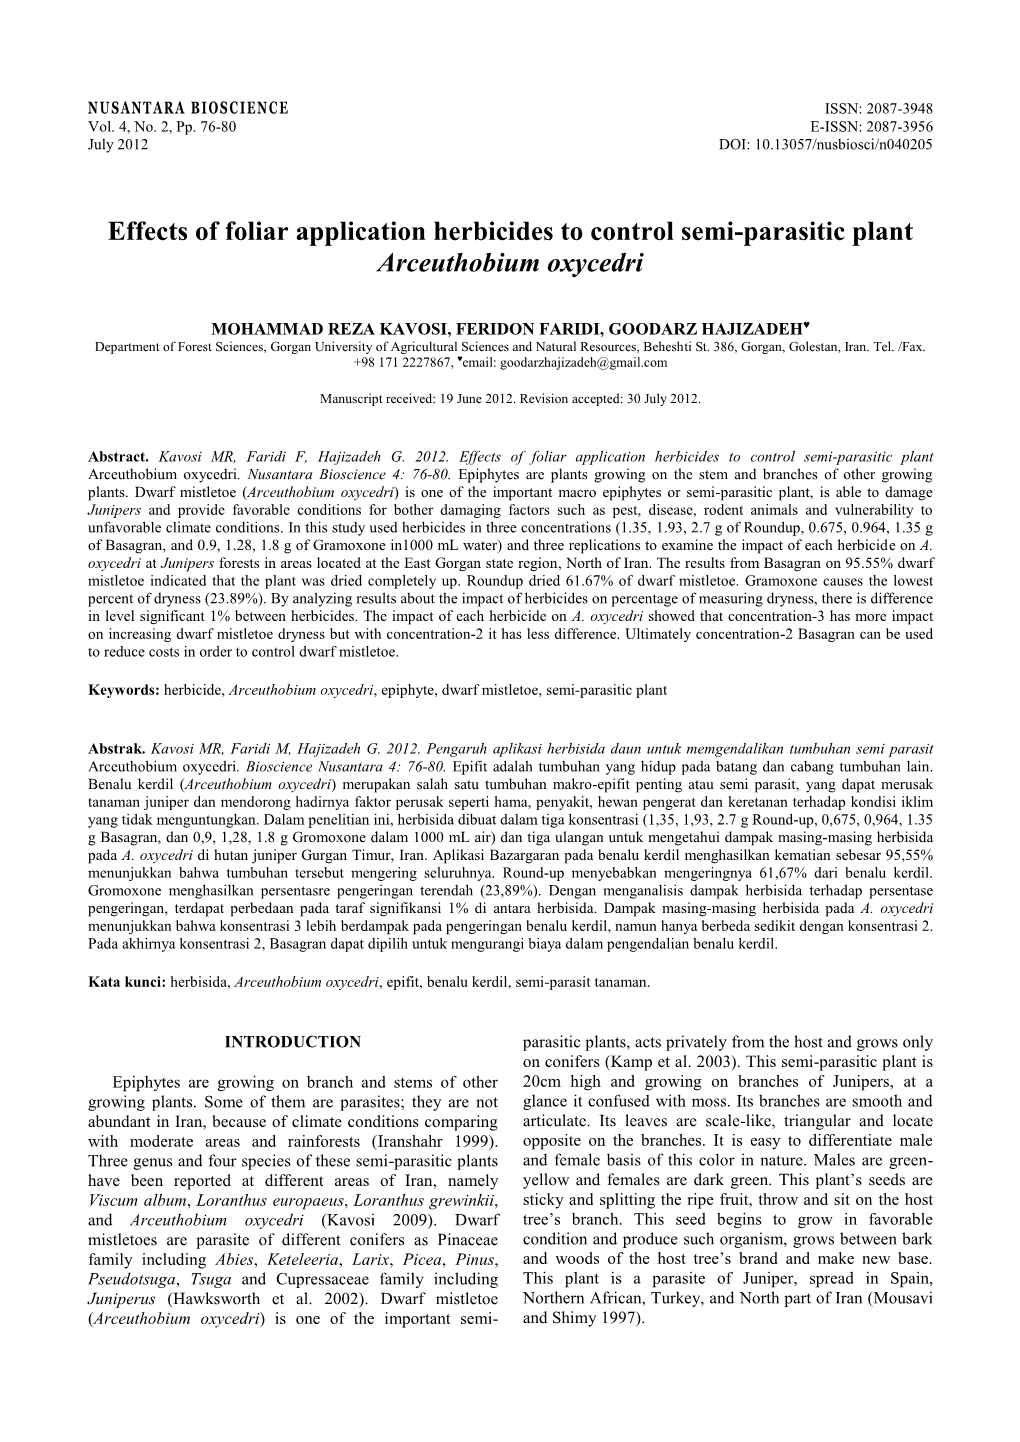 Effects of Foliar Application Herbicides to Control Semi-Parasitic Plant Arceuthobium Oxycedri